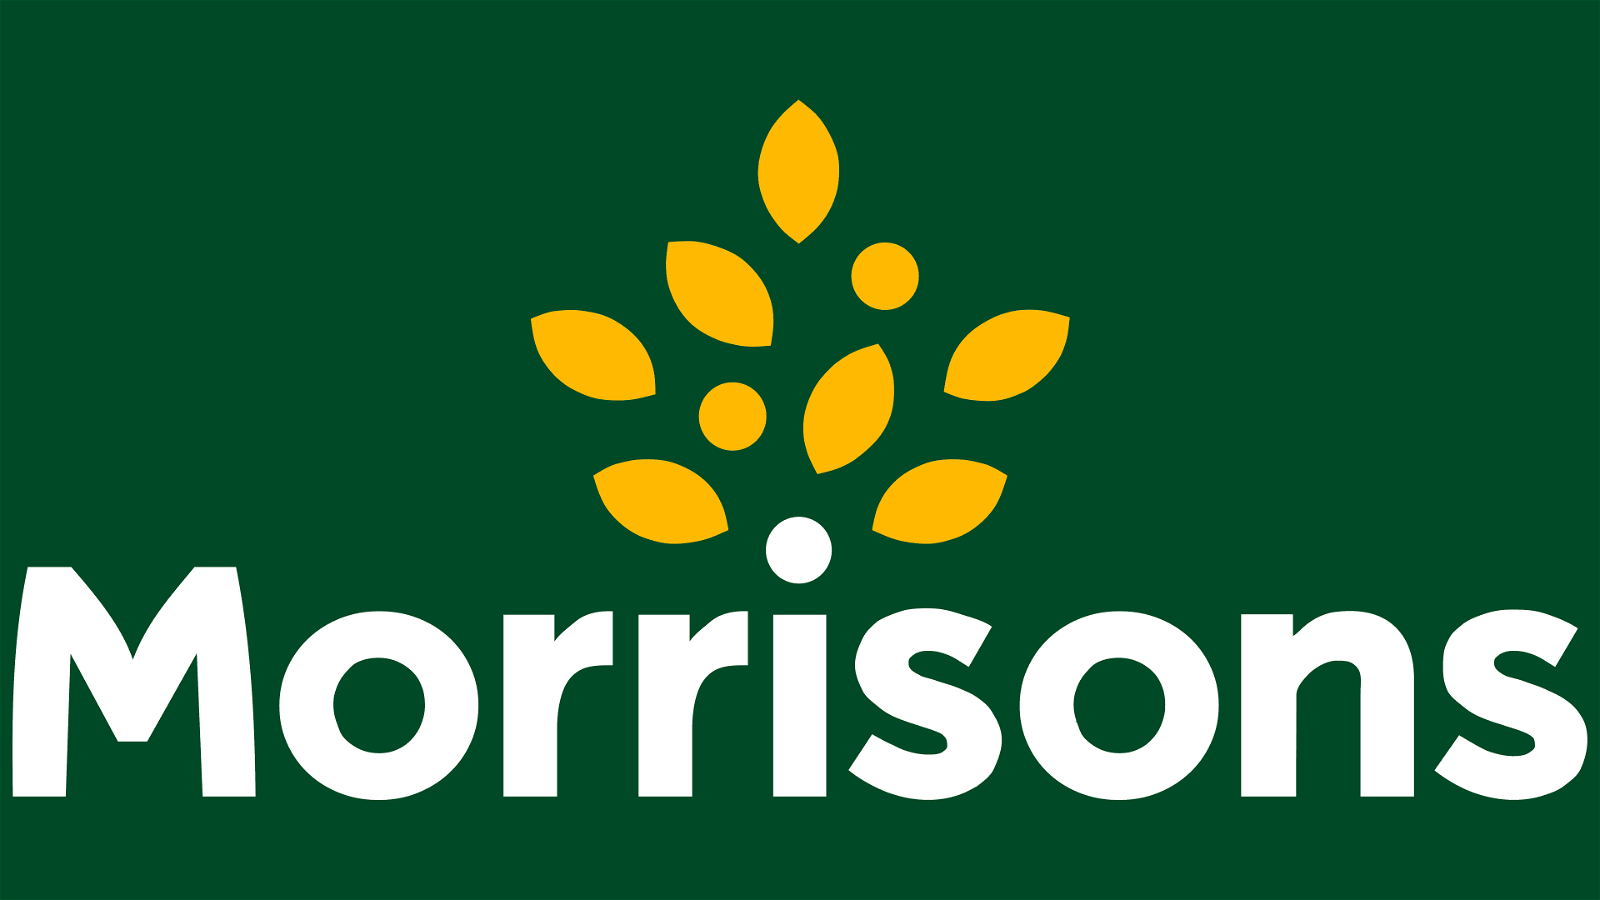 Morrisons Brand Image